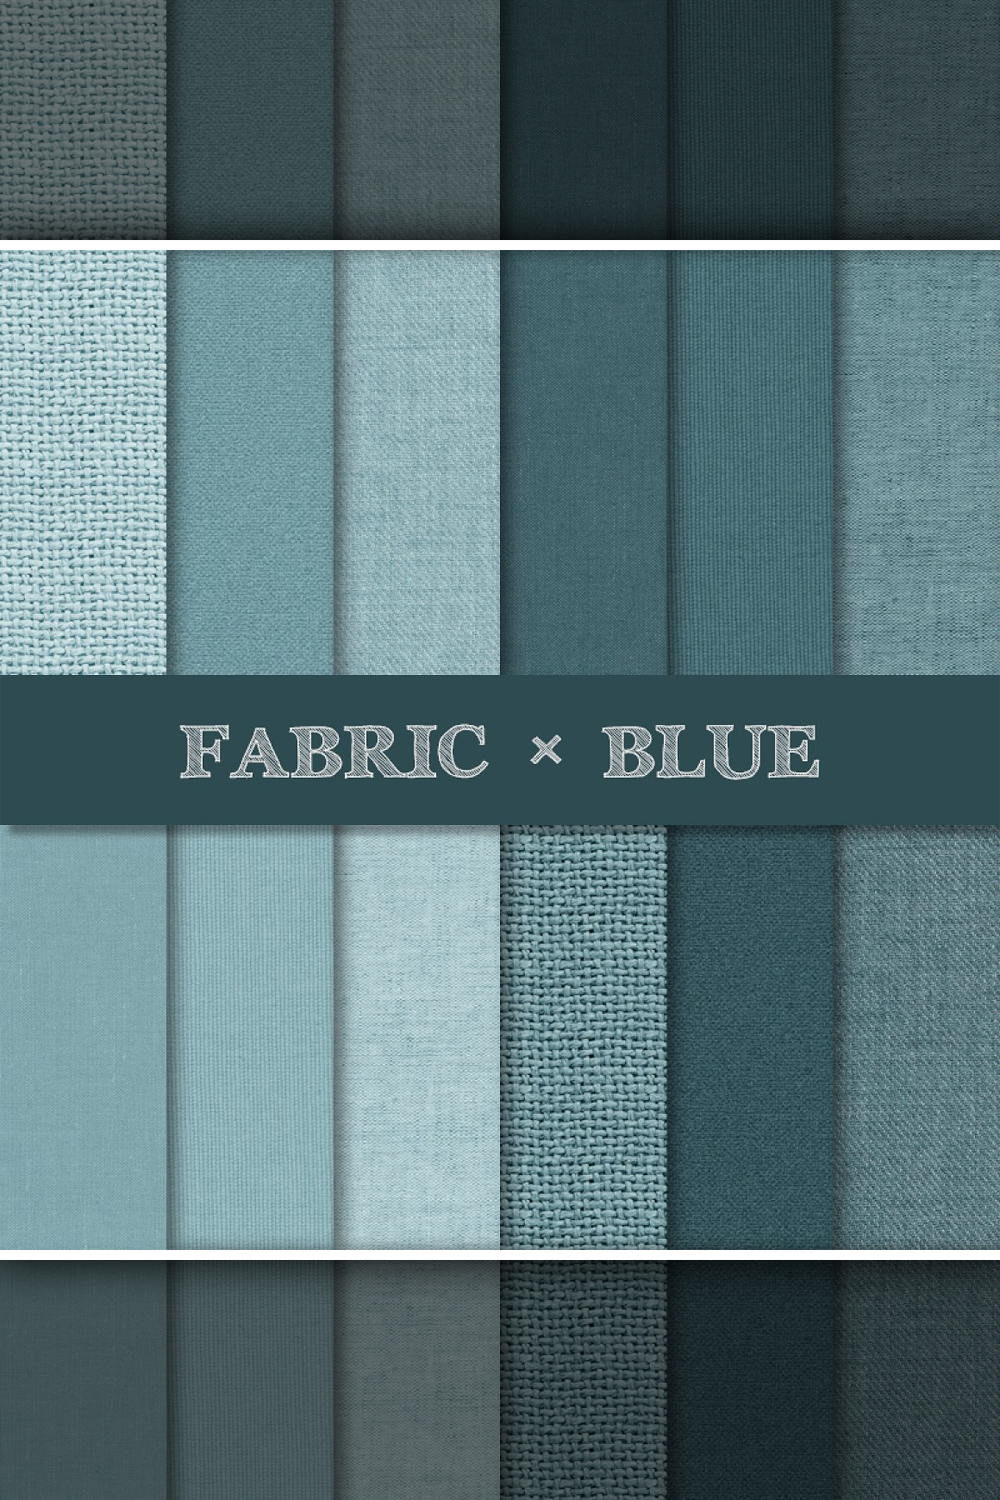 Fabric texture backgrounds blue of pinterest.